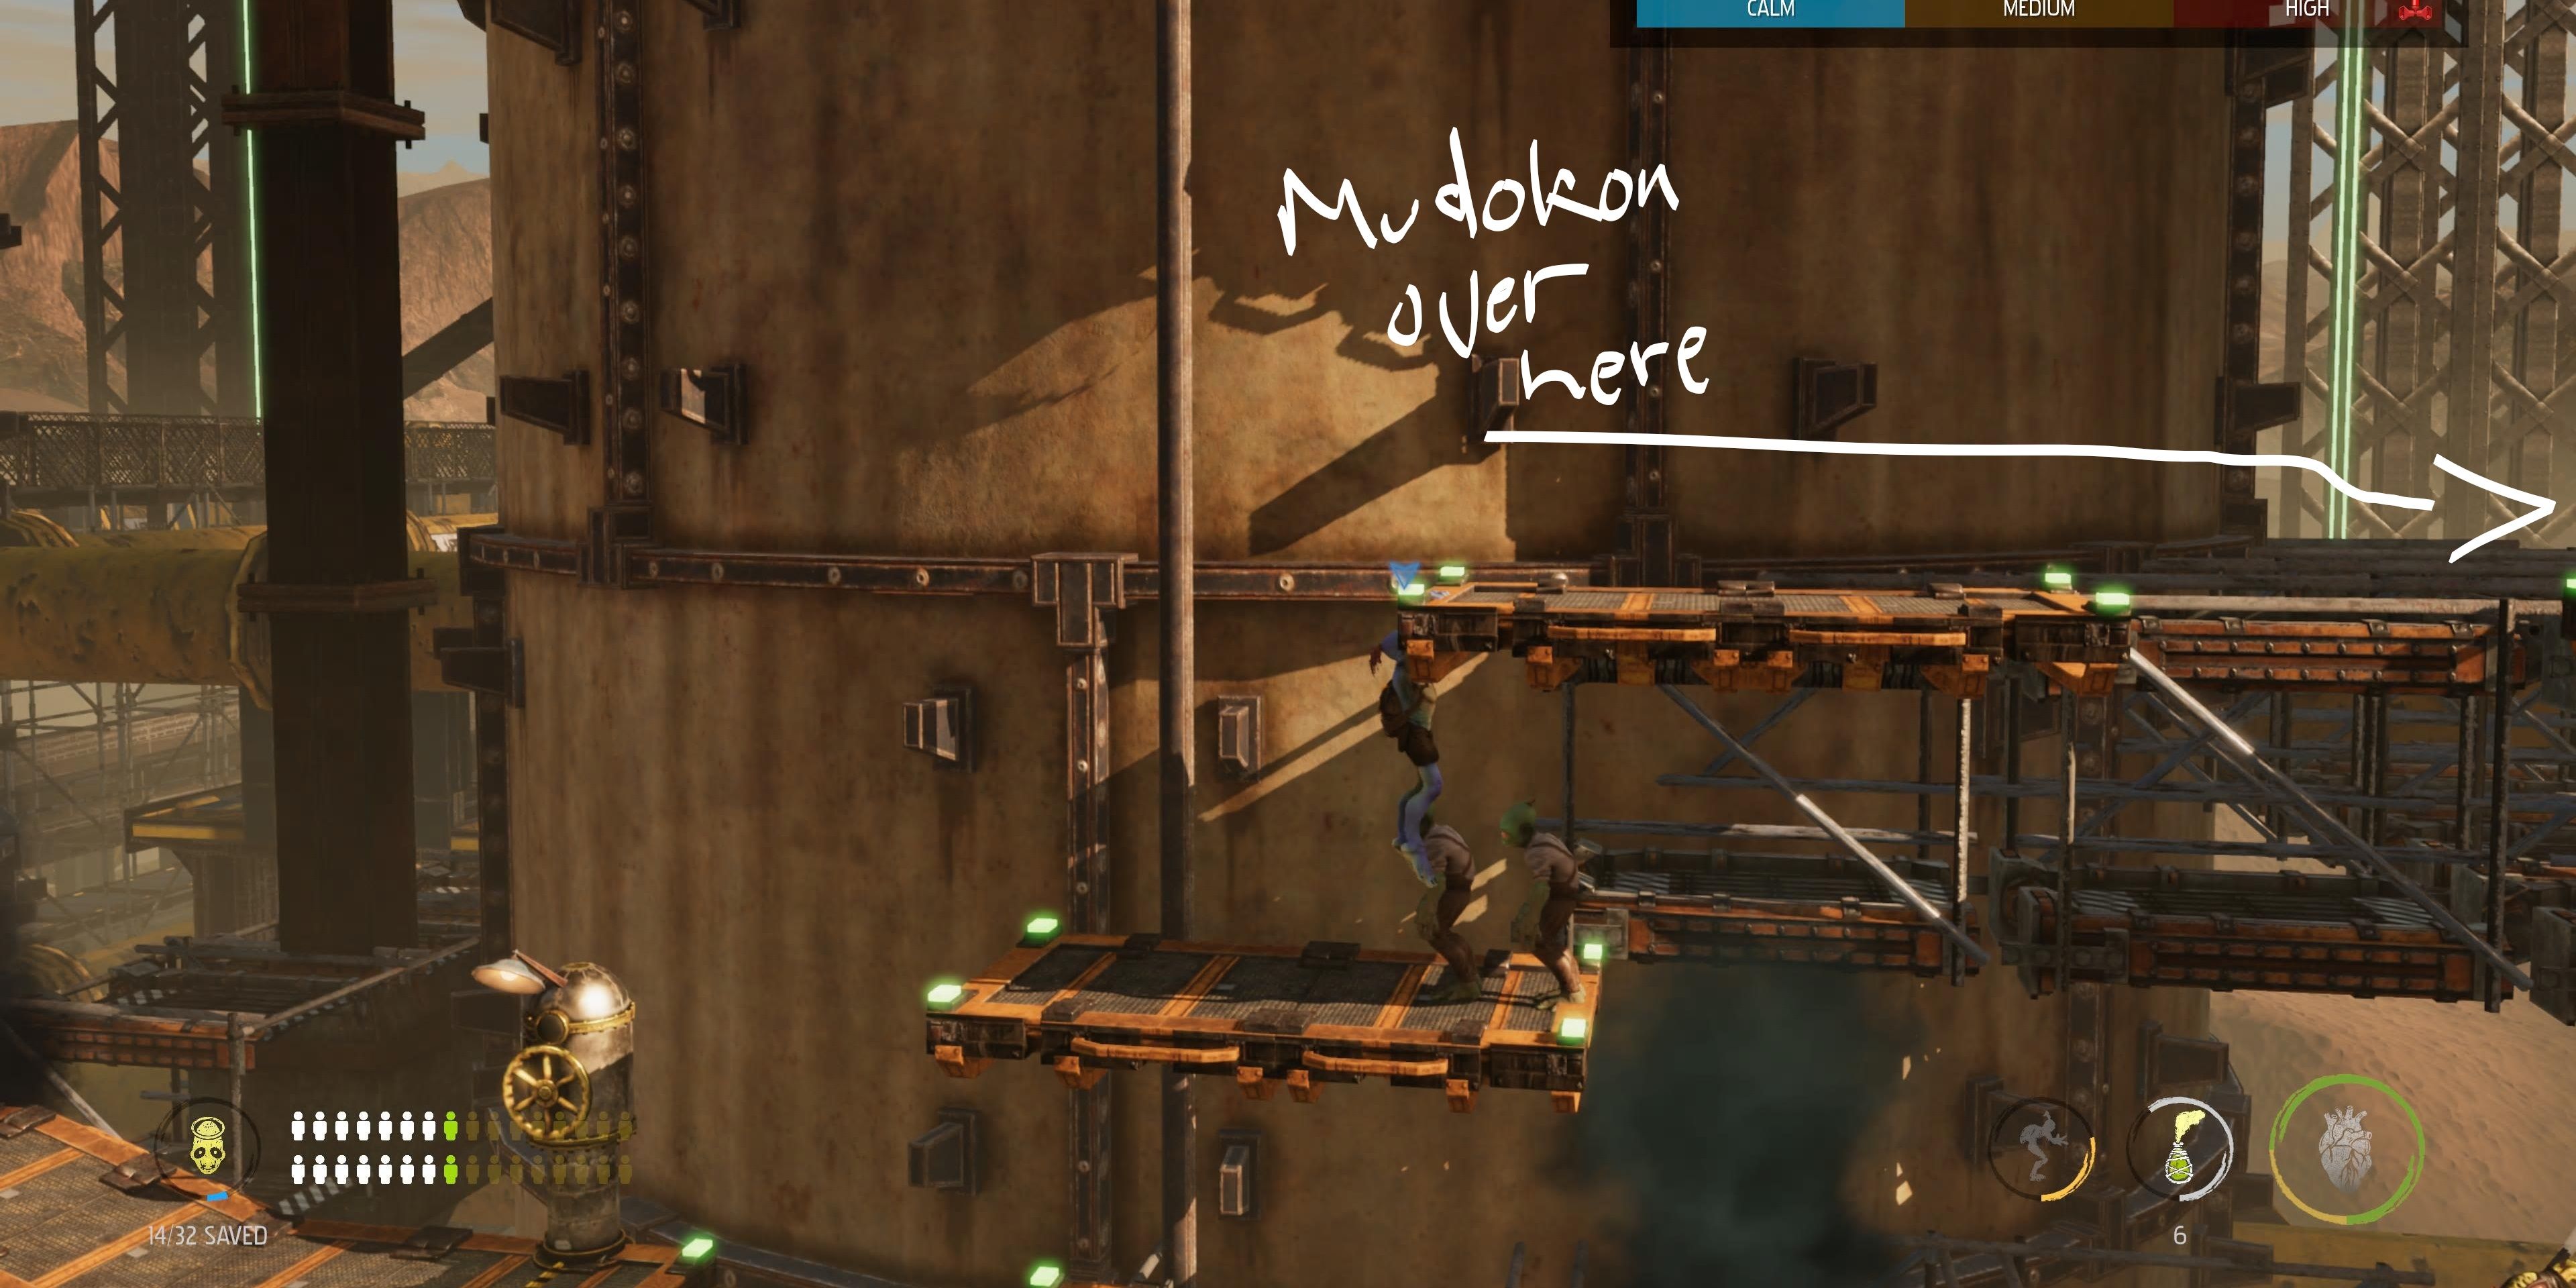 Mudokon directions in Oddworld Soulstorm